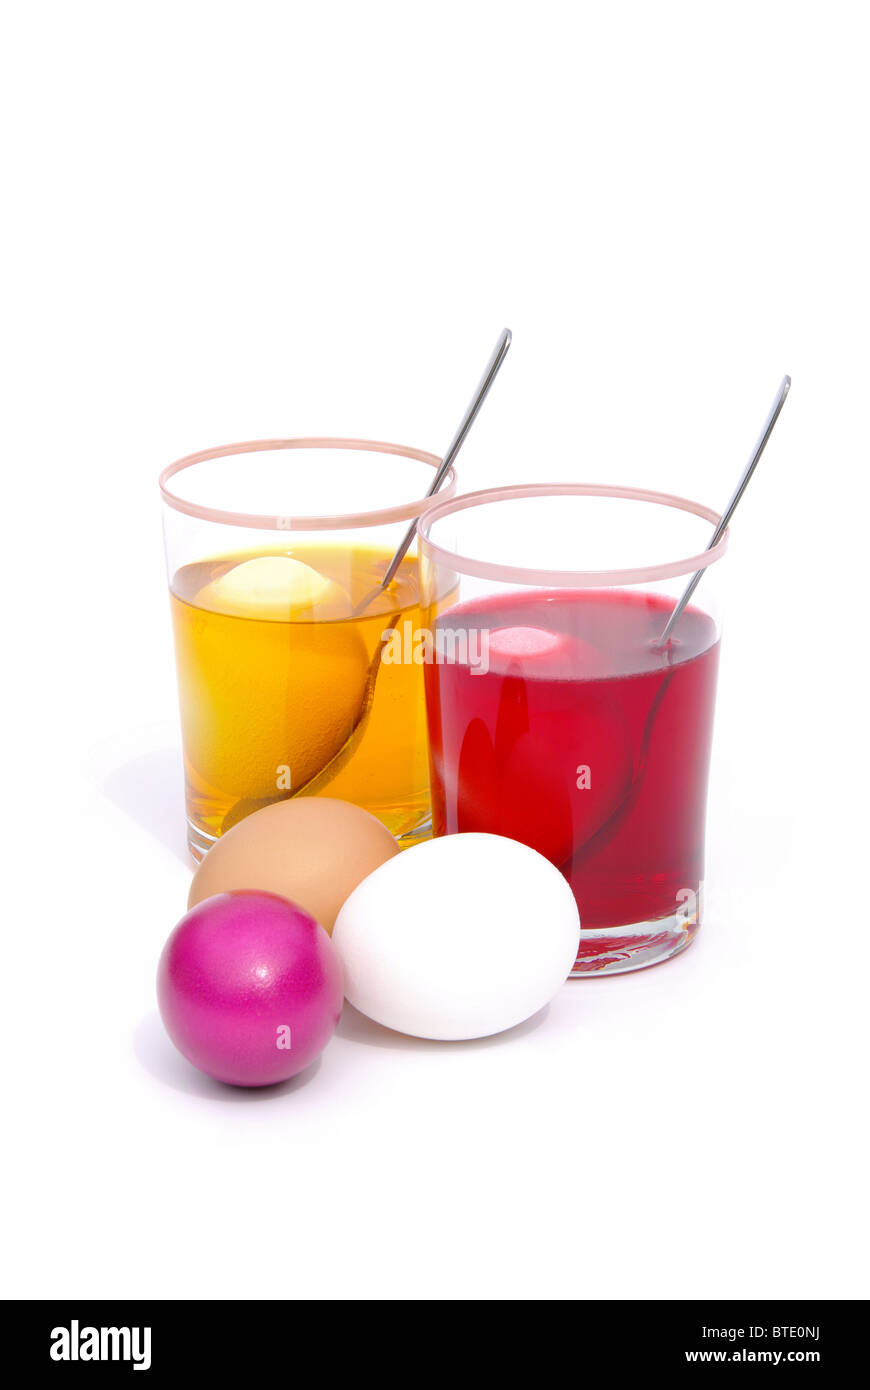 Ostereier färben - easter eggs colour 20 Stock Photo